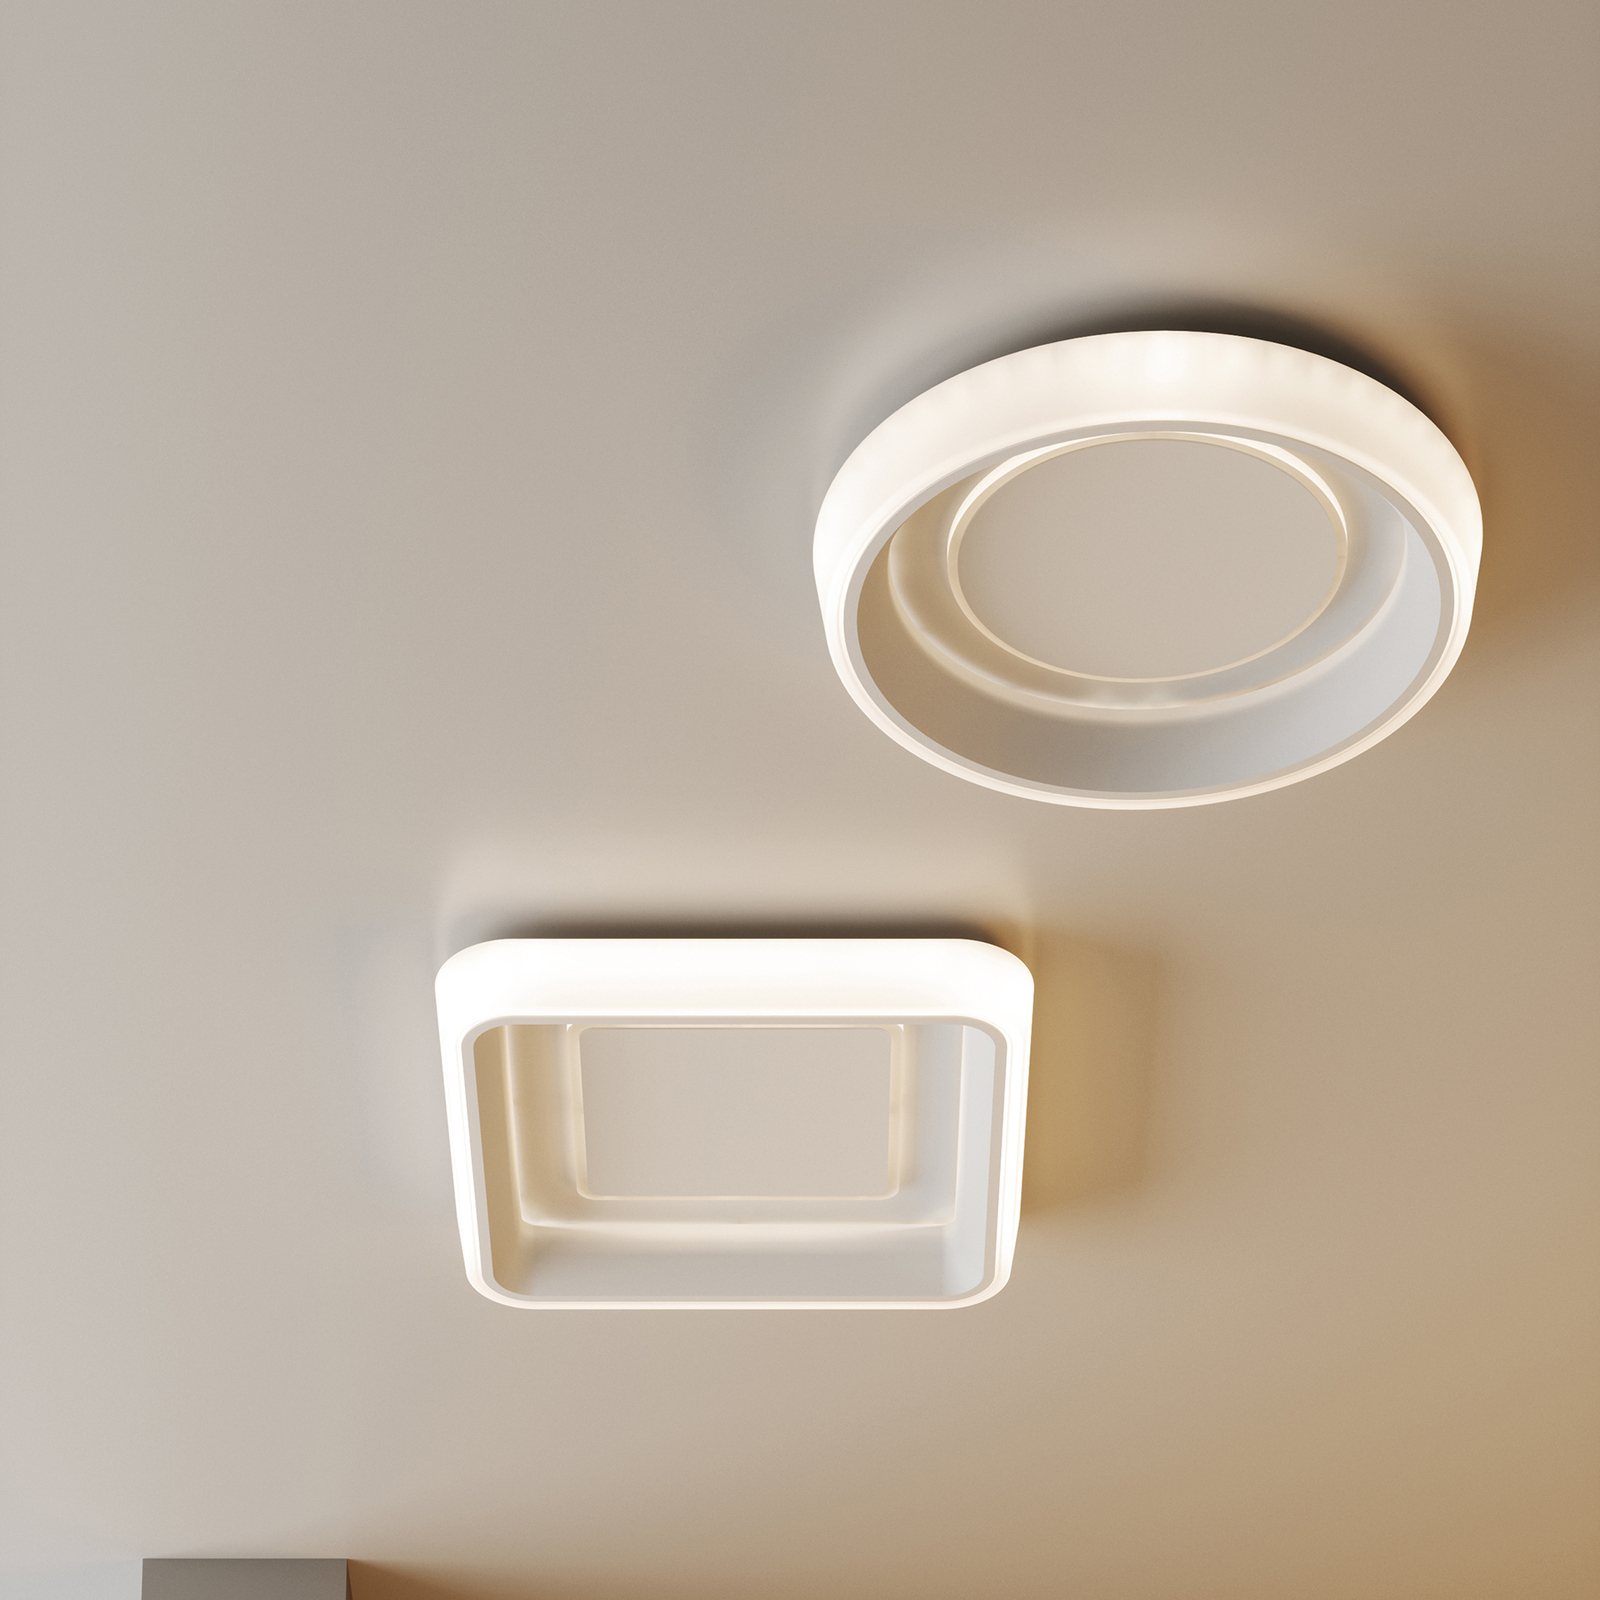 Nurax LED ceiling light selectable light colour, angular